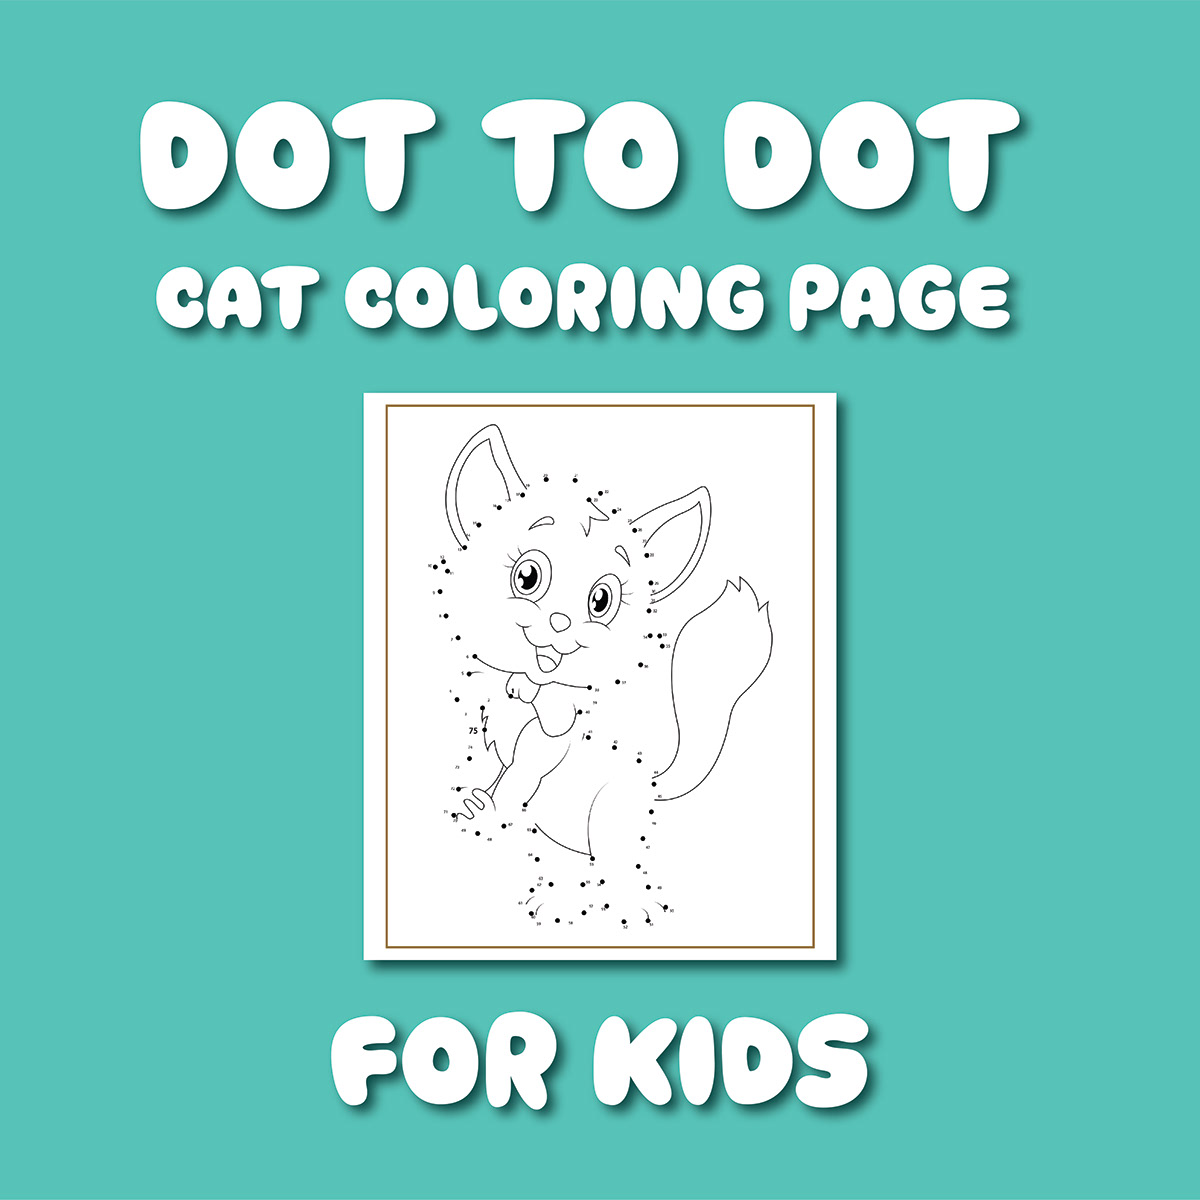 coloring kids ILLUSTRATION  dots Cat catcoloringbook cats coloringbook coloringpages dottodotbook